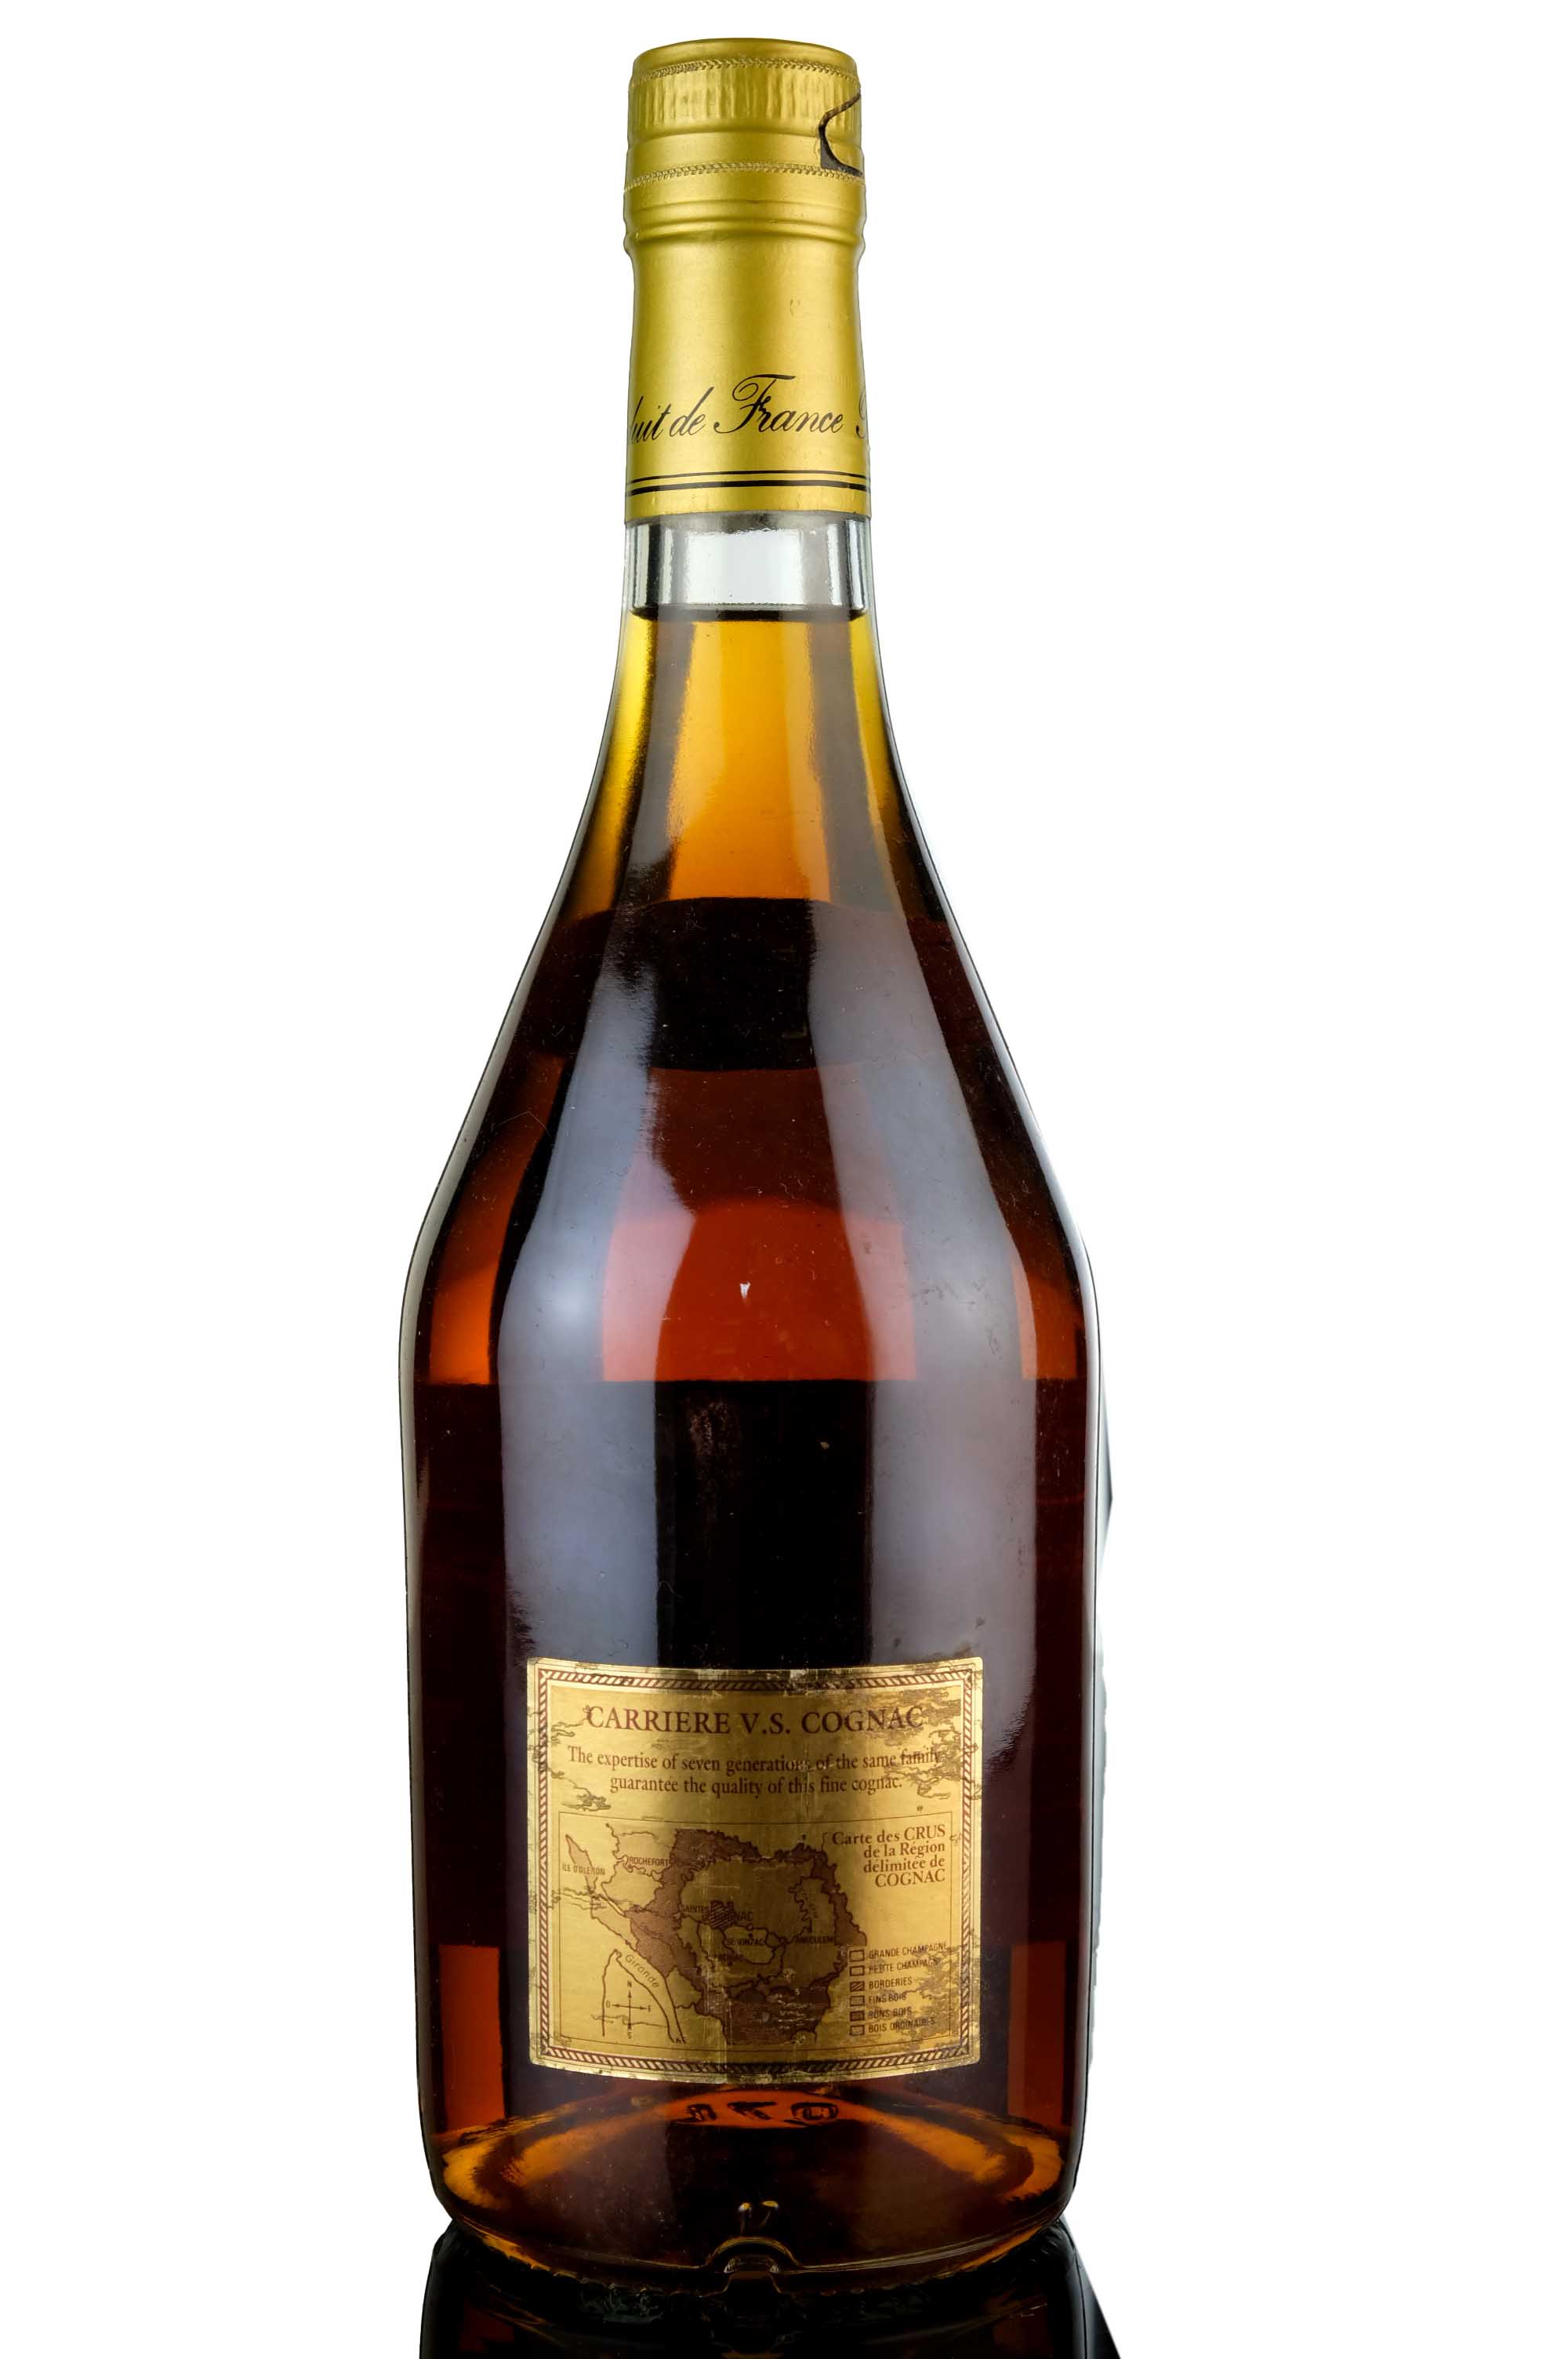 Cognac Varriere VS Cognac